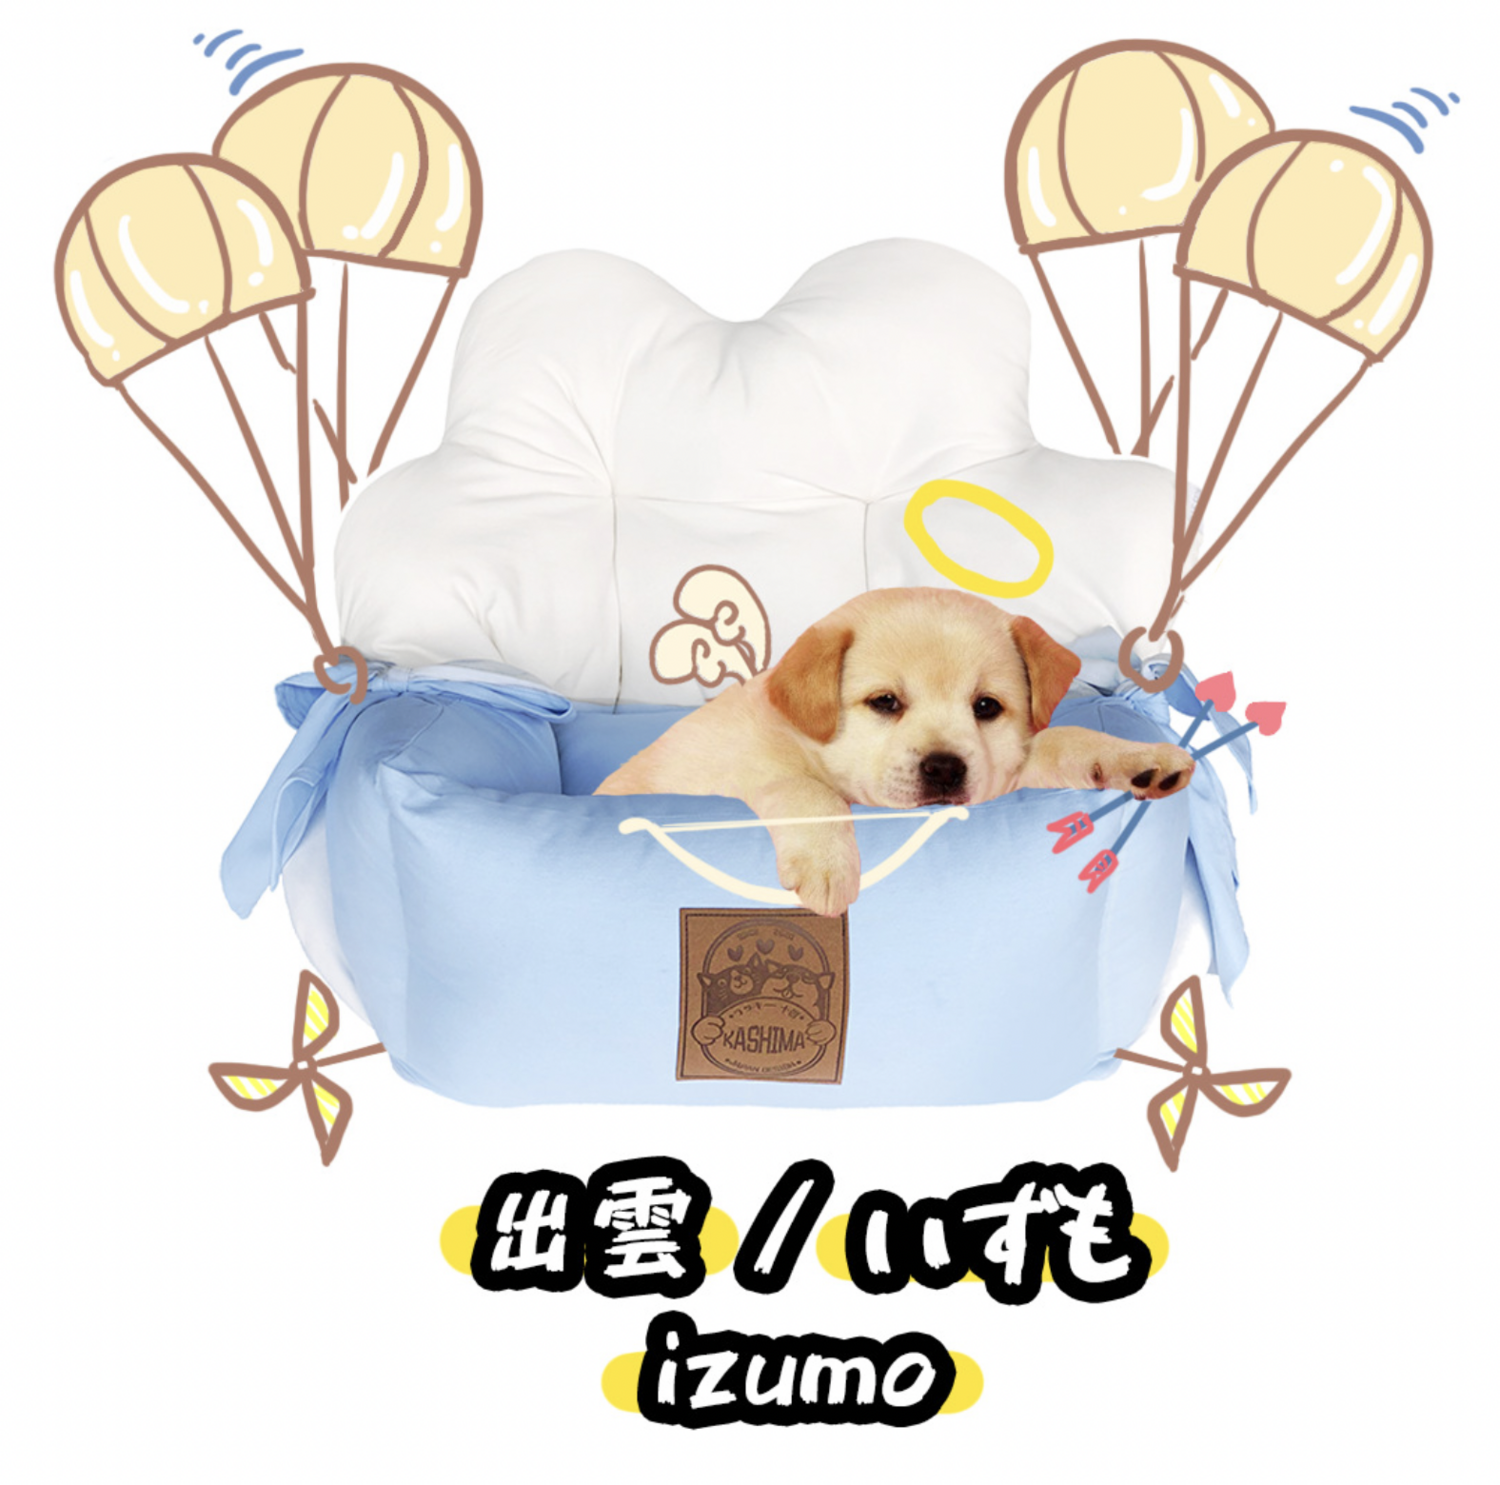 izumo cloud shape dog/cat car seat